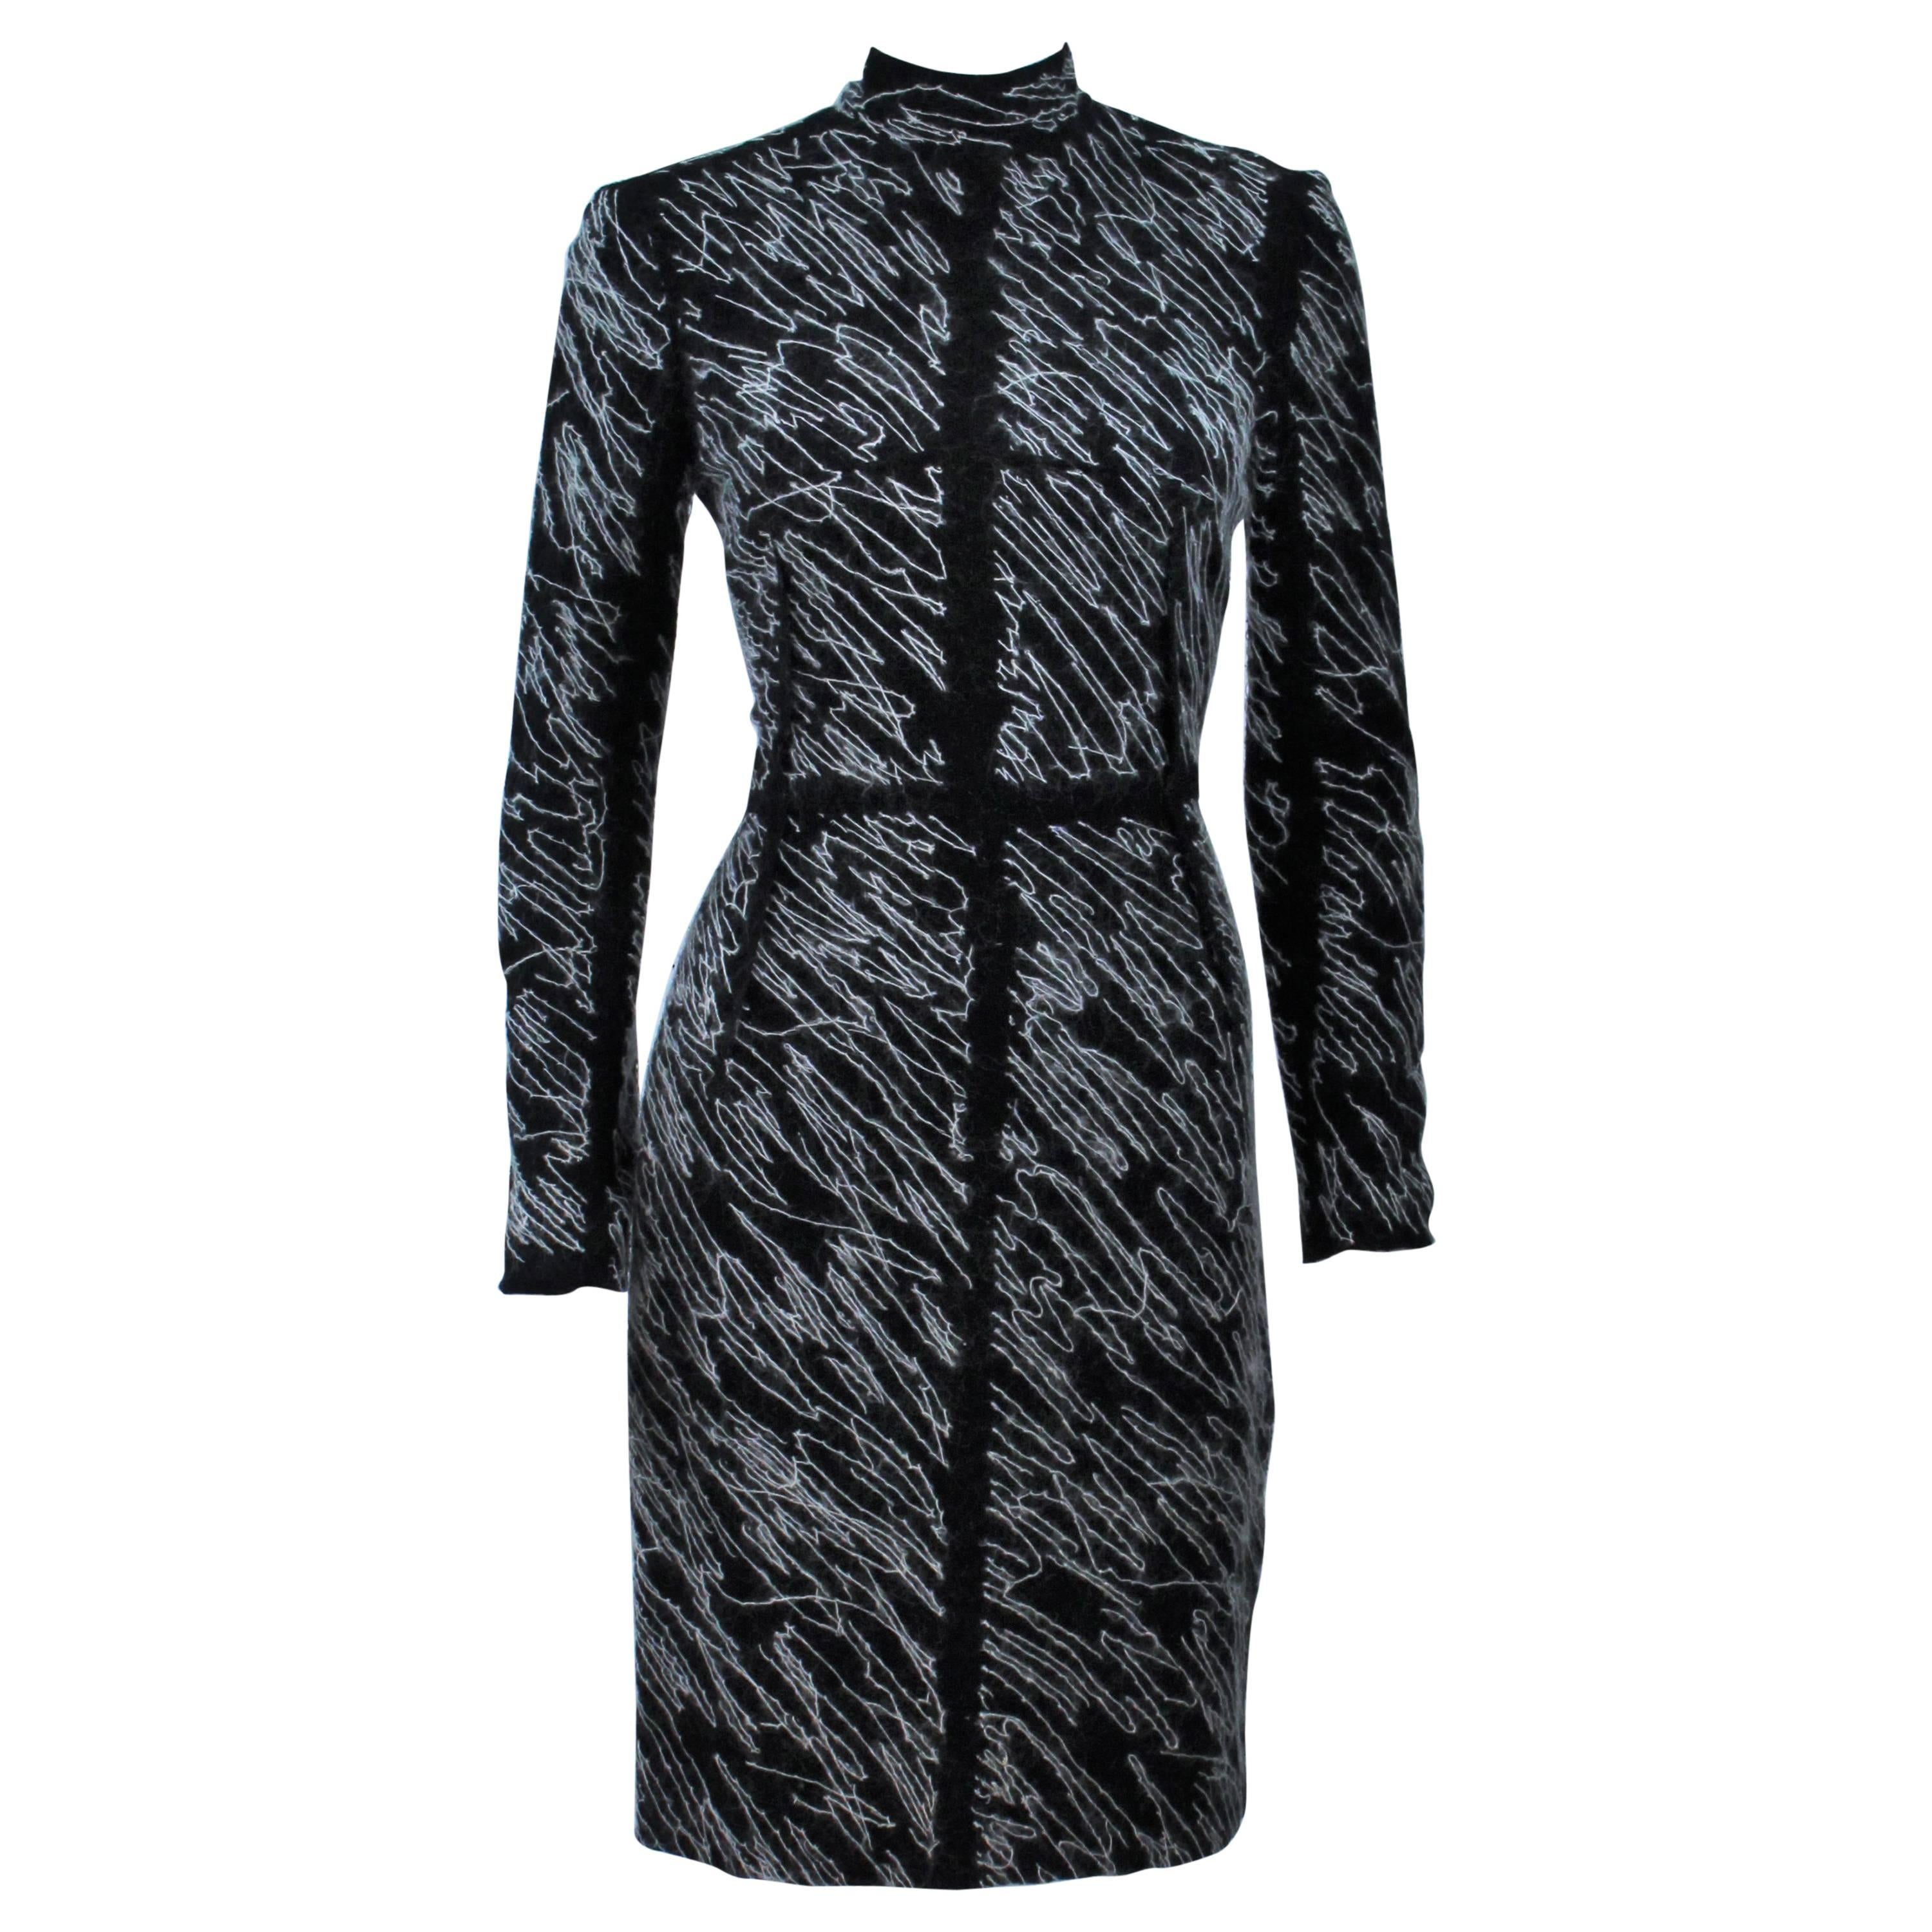 PROENZA SCHOULER Black & White Contrast Wool Dress Size 8